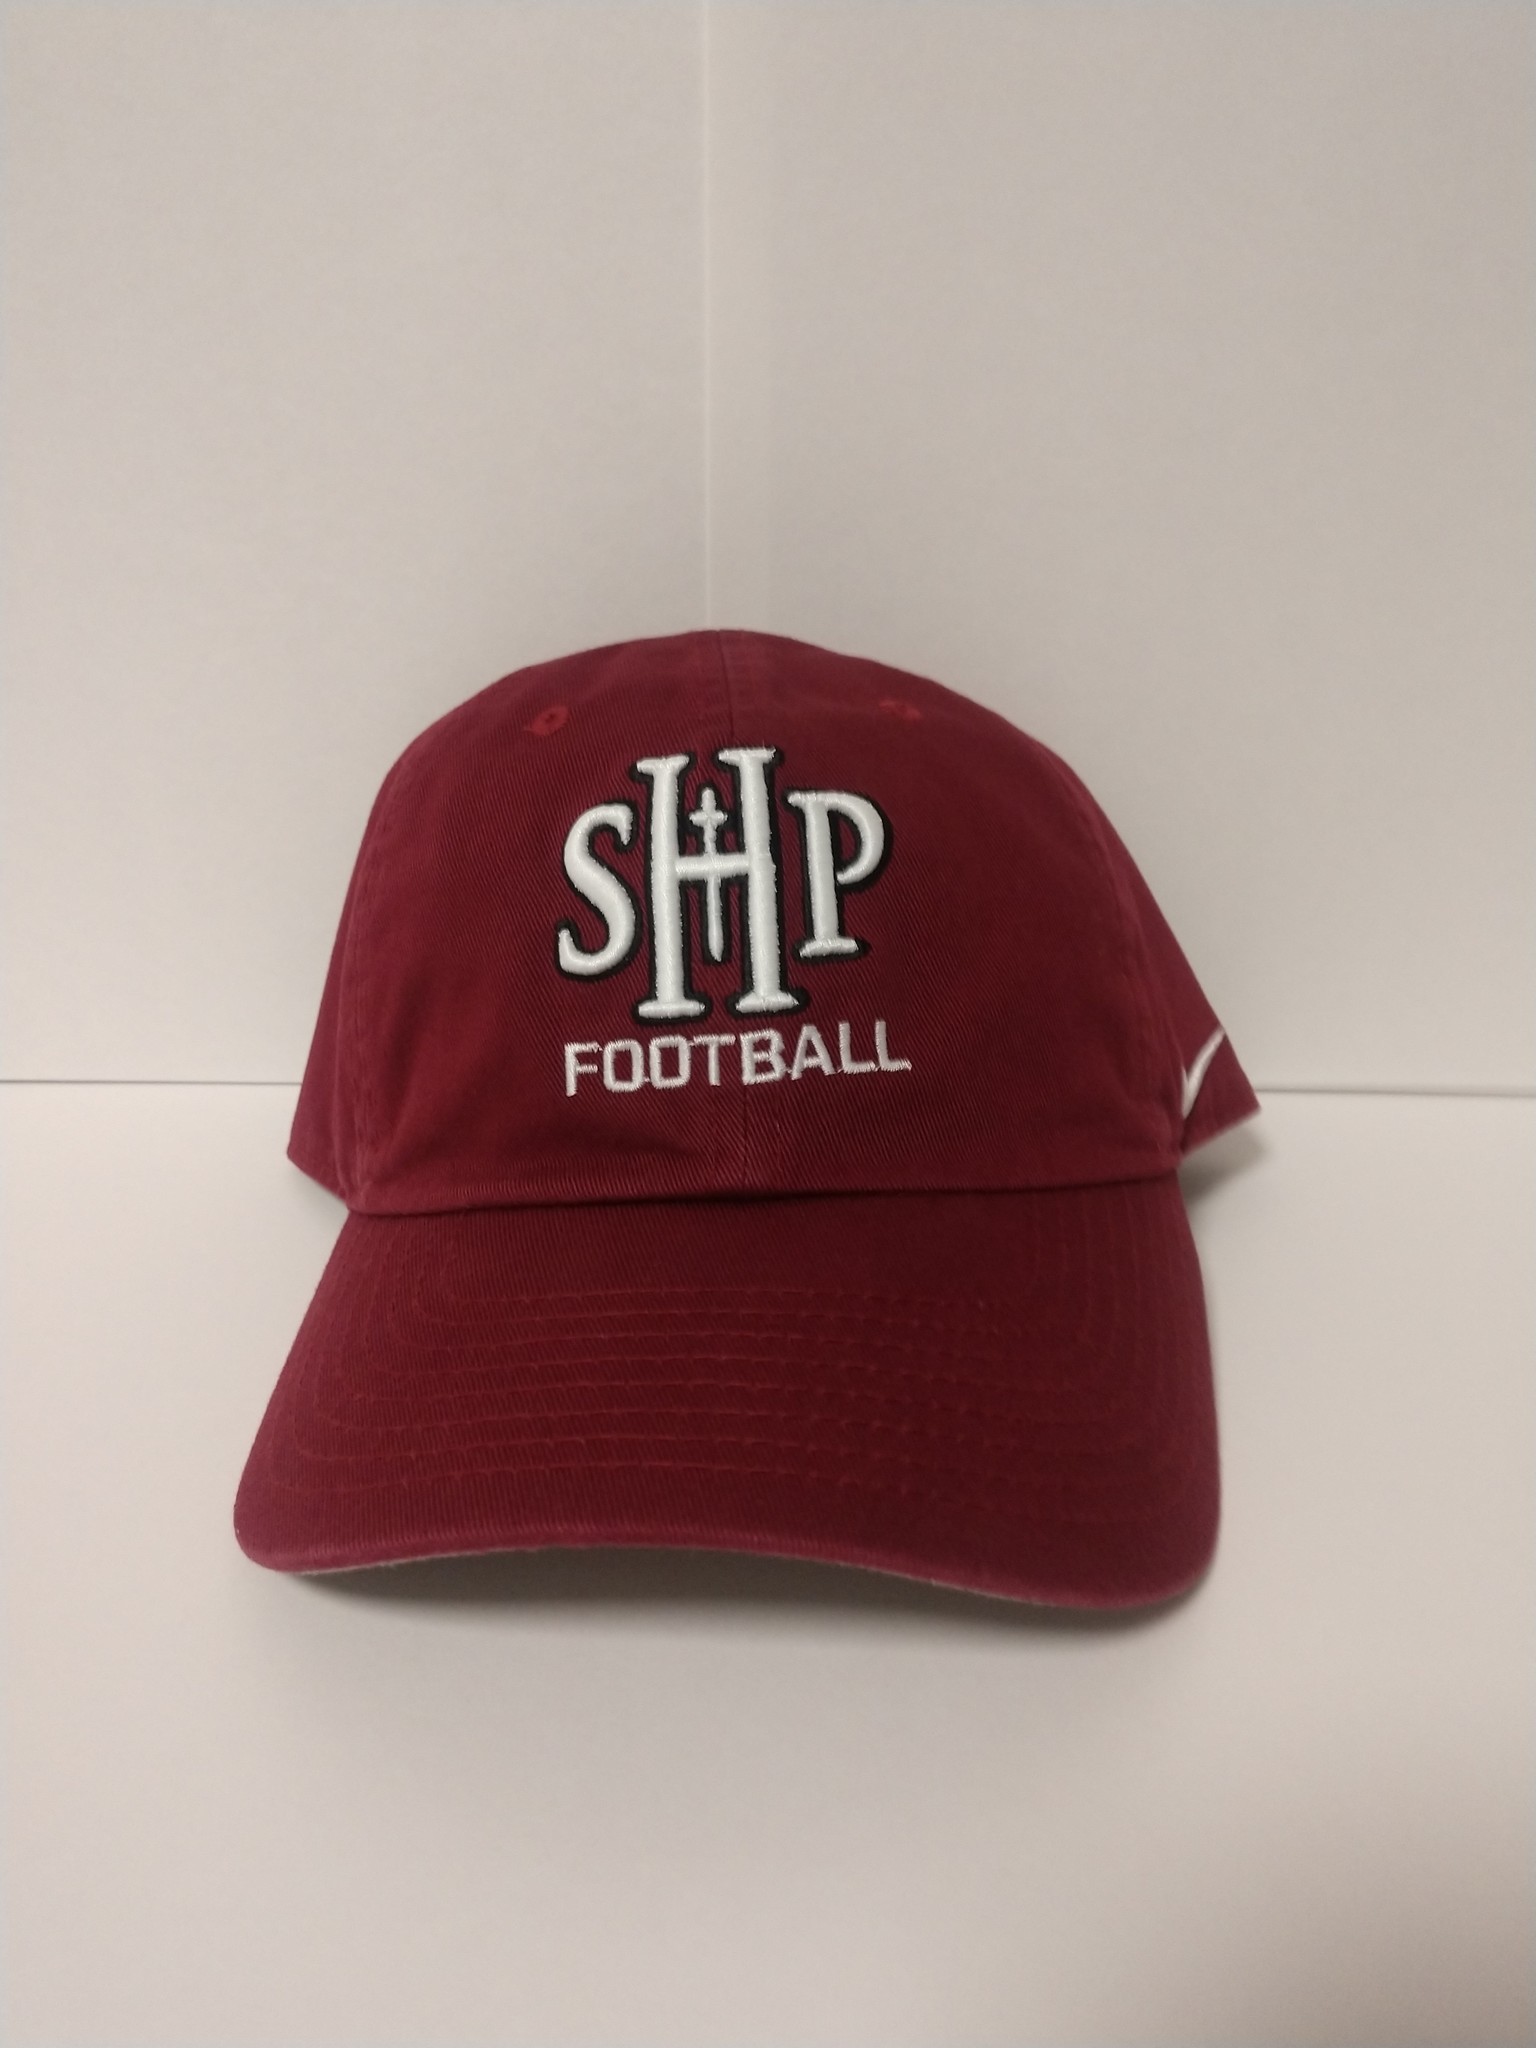 SHP Football Hat - Cardinal